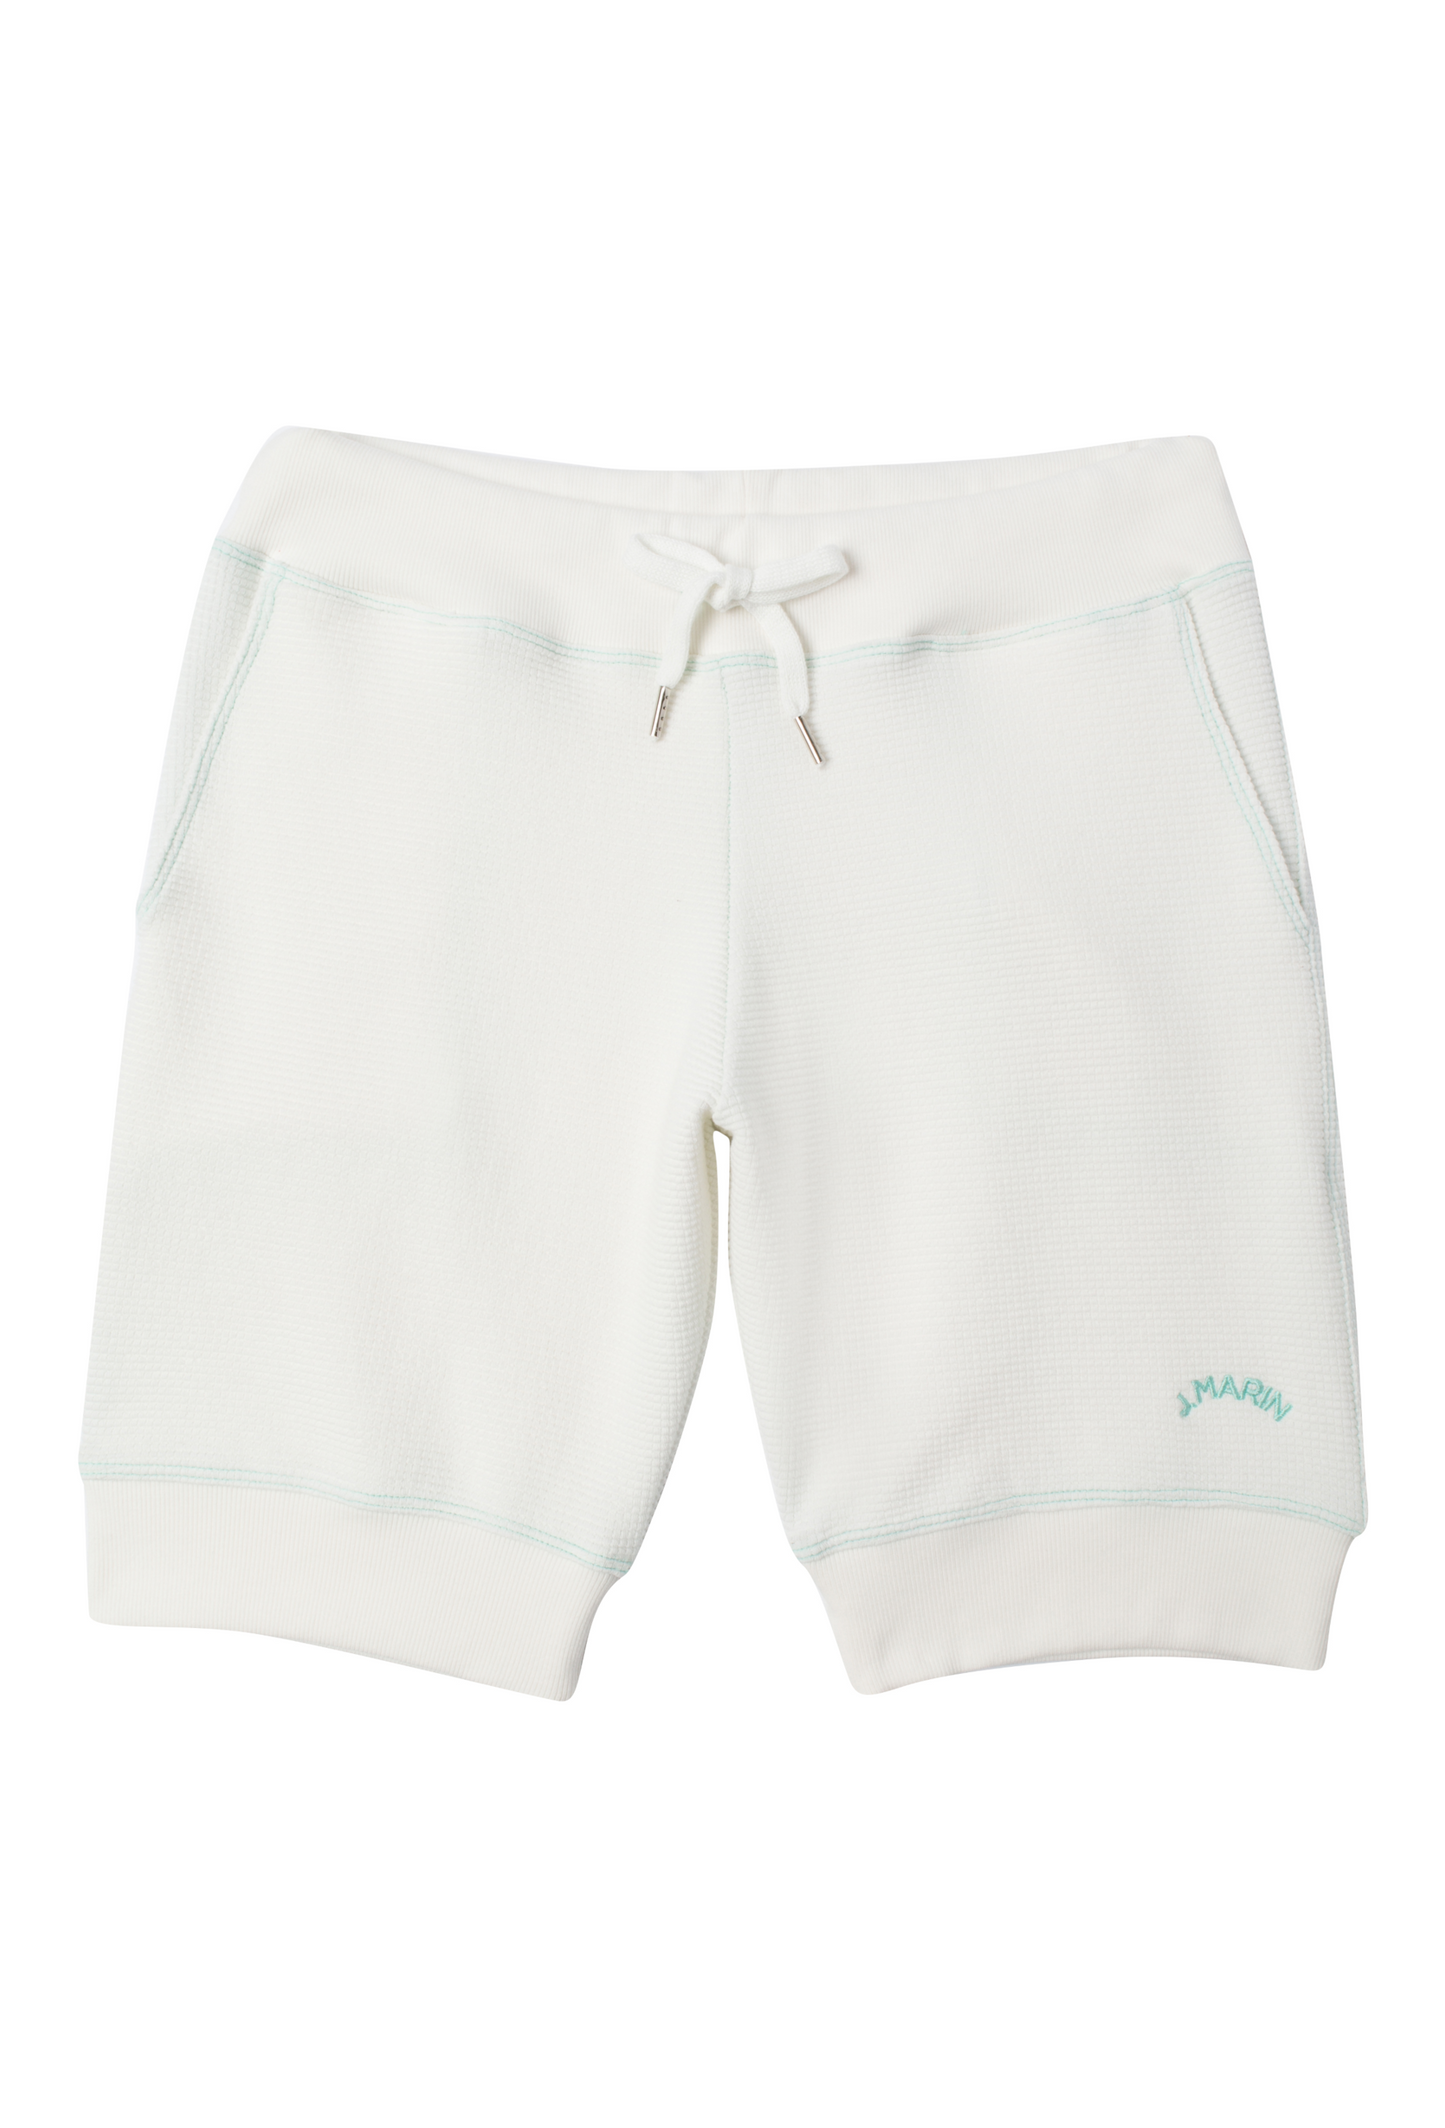 Vintage-Style Thermal Knicker Beach Shorts - Organic Cotton - Natural/Marine Green Stitch - J. Marin